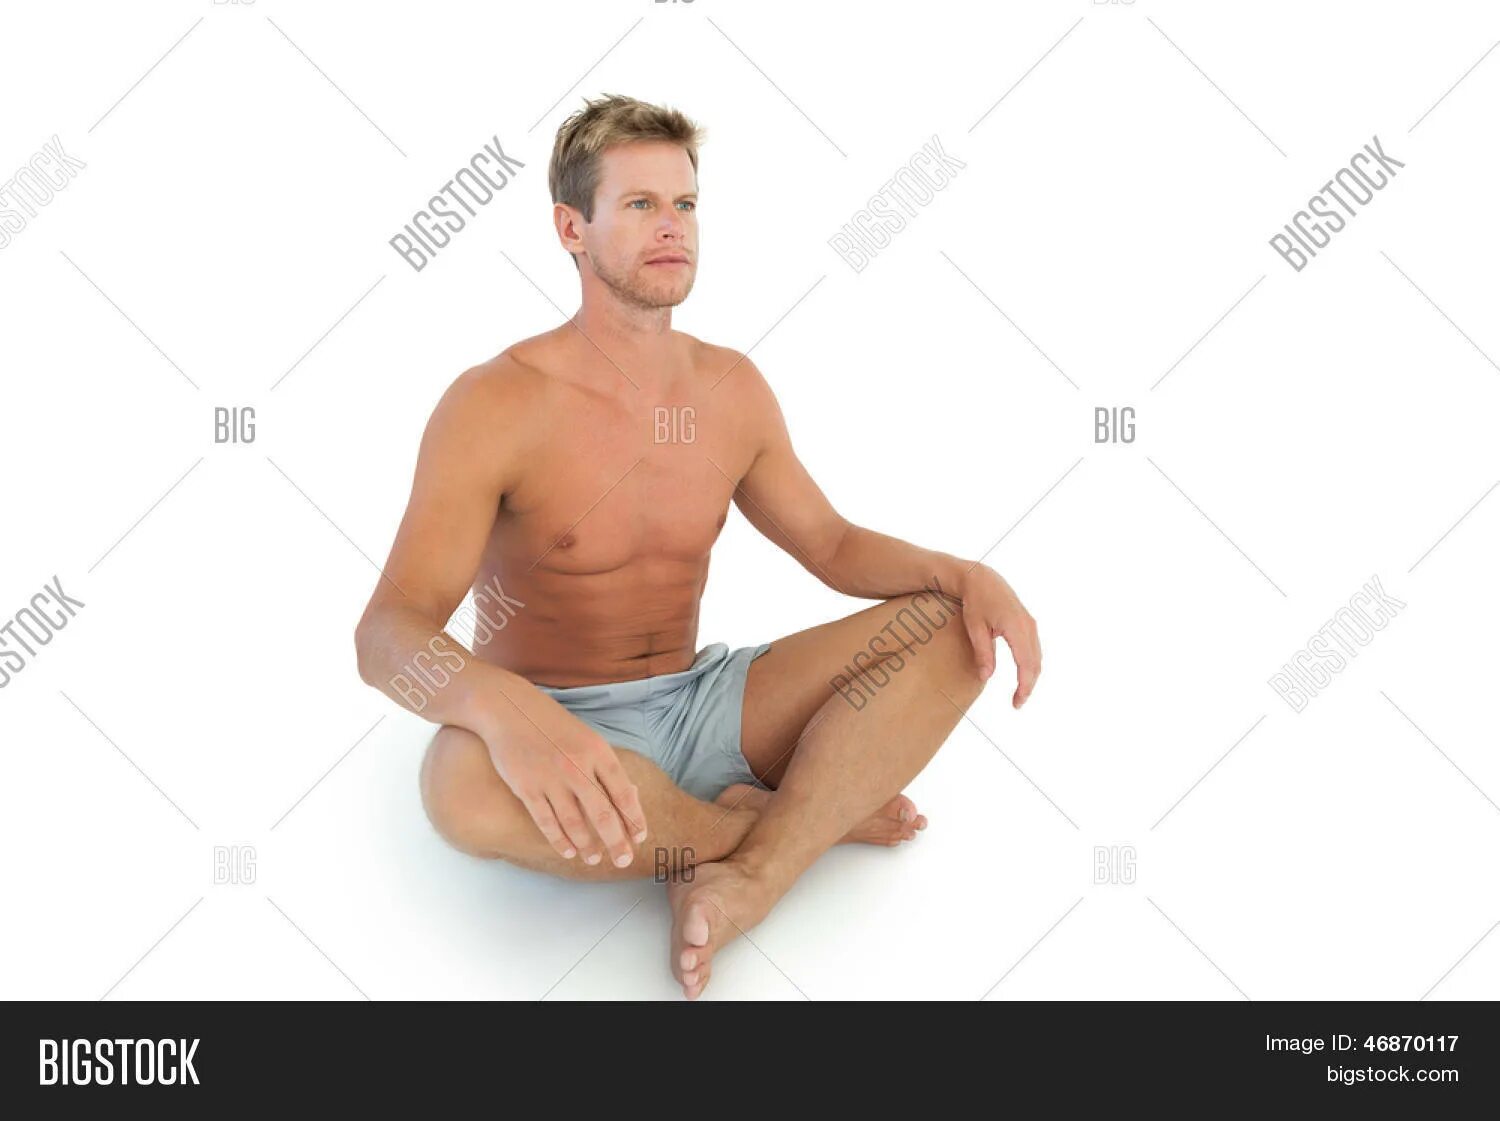 Мужчина сидит в позе лотоса. Парень сидит по турецки. Человек сидит скрестив ноги. Поза лотоса вид с боку.